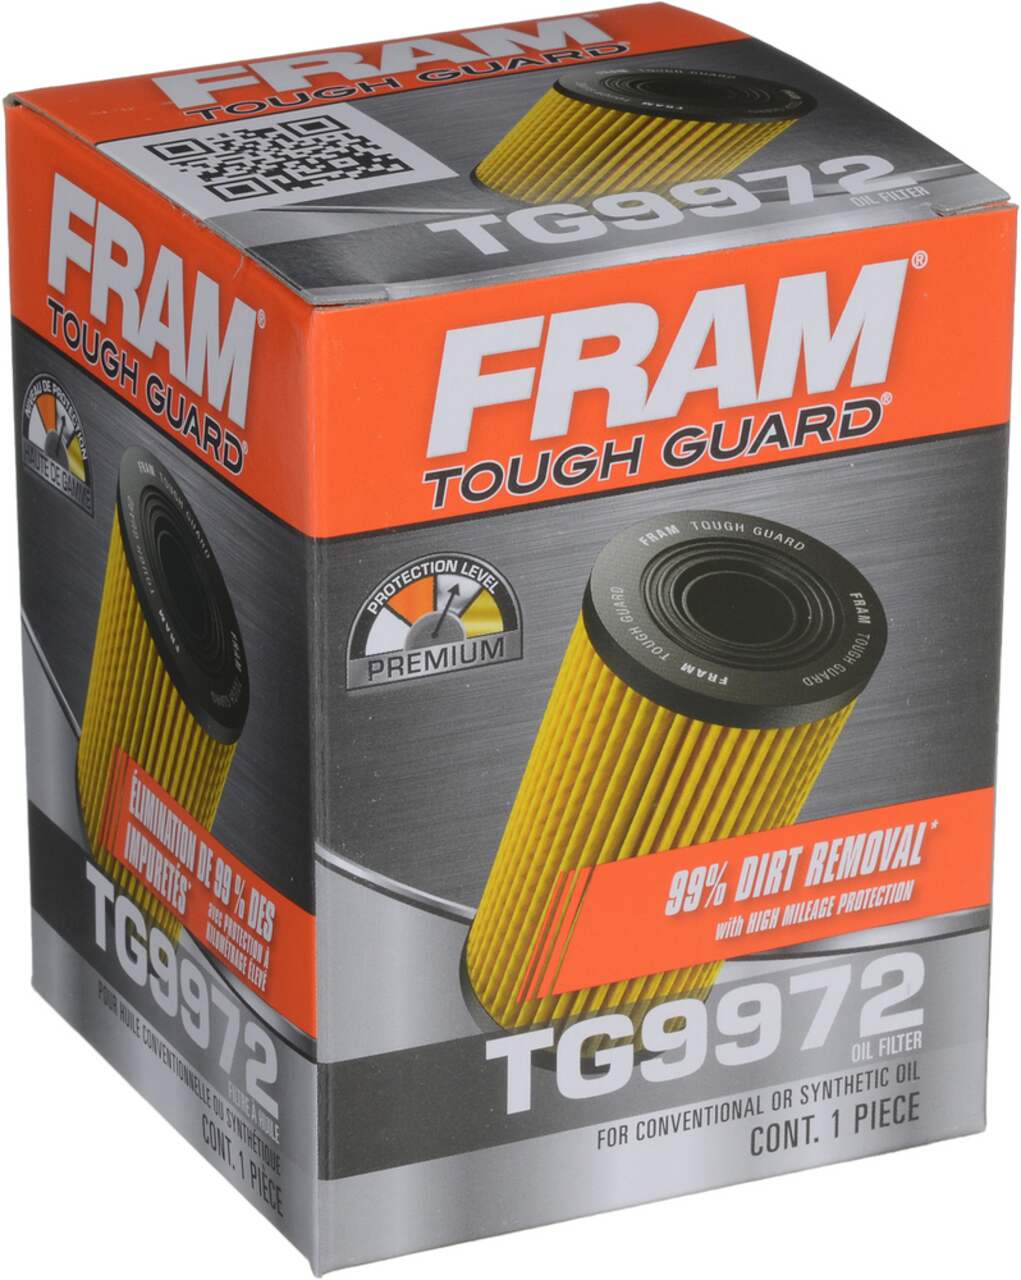 FRAM TG9972 Tough Guard Oil Filter